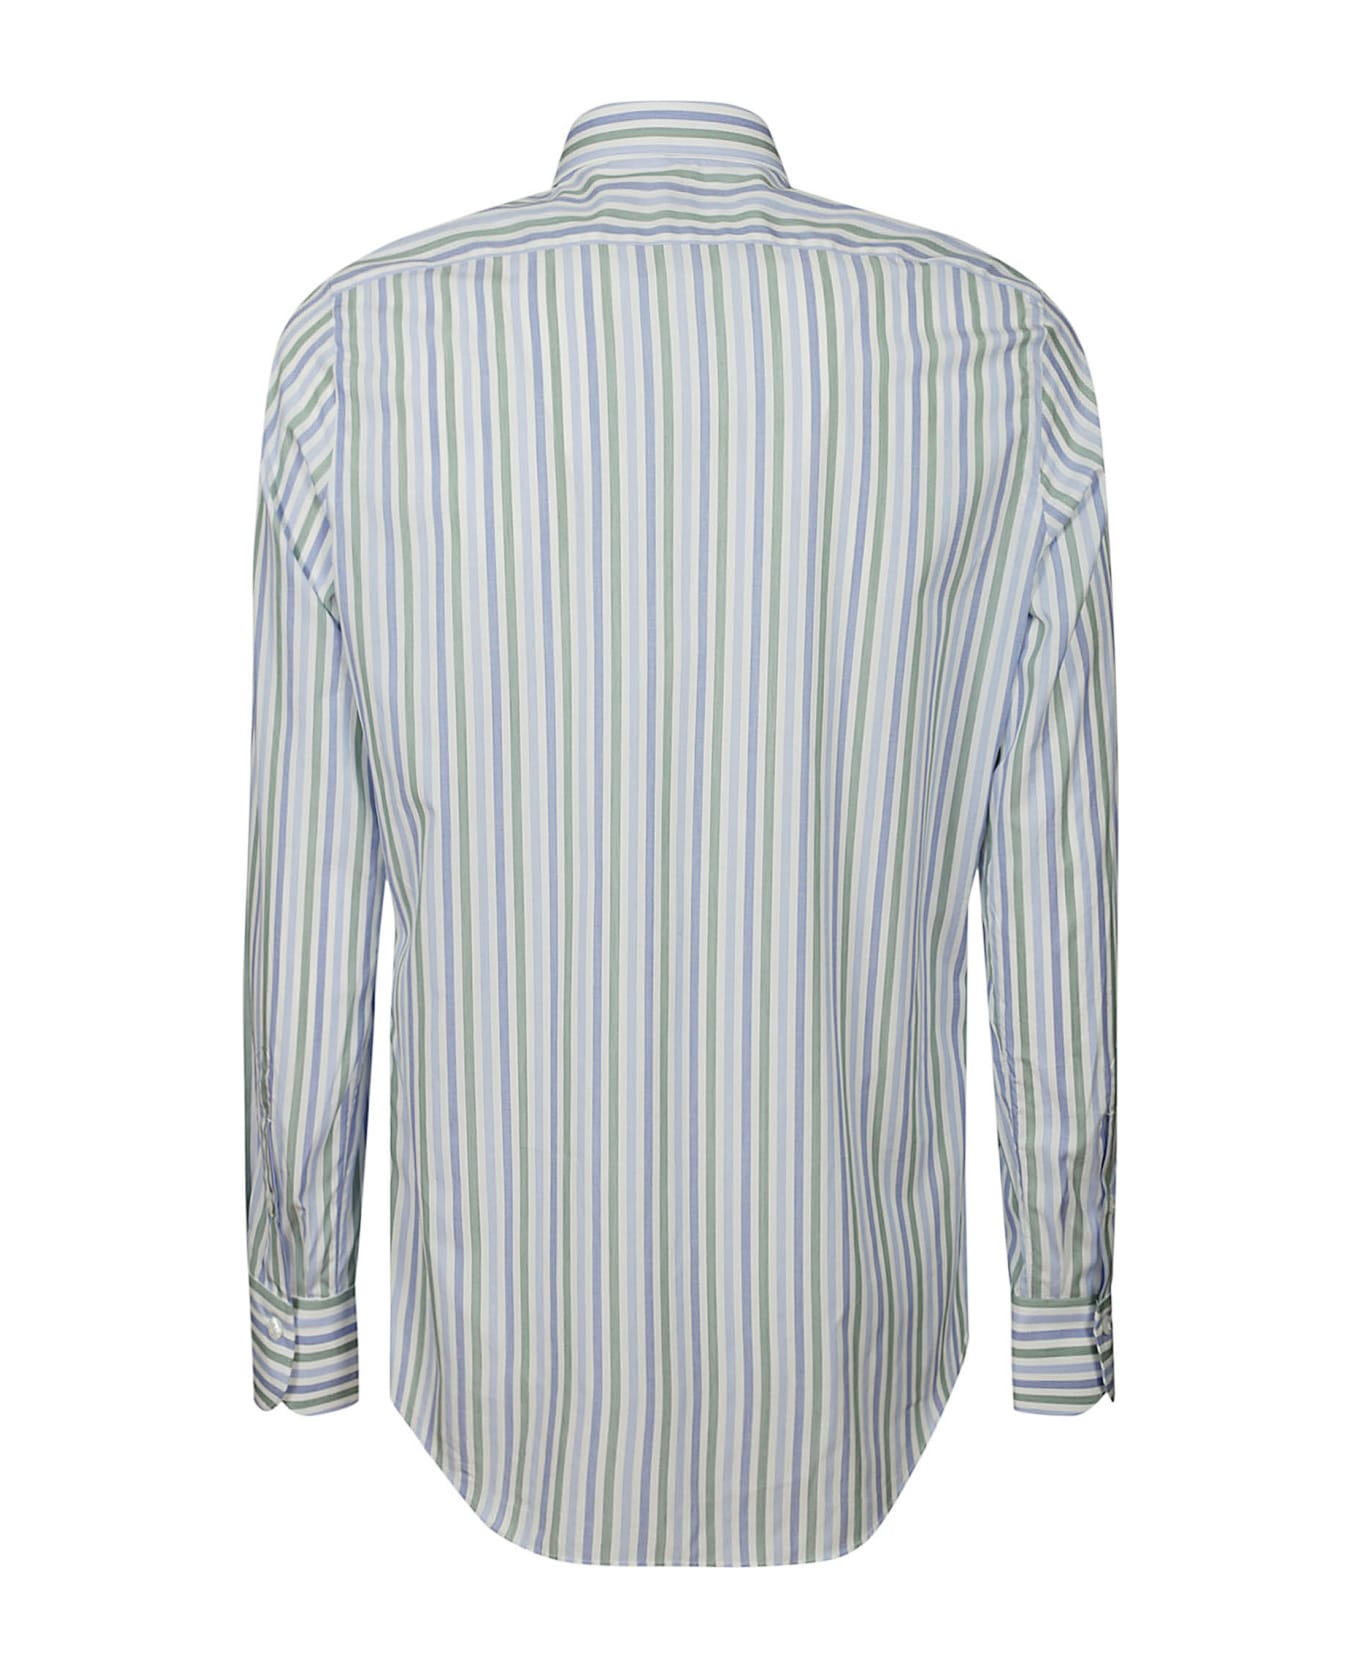 Finamore Shirt 170.2 - Stripes シャツ